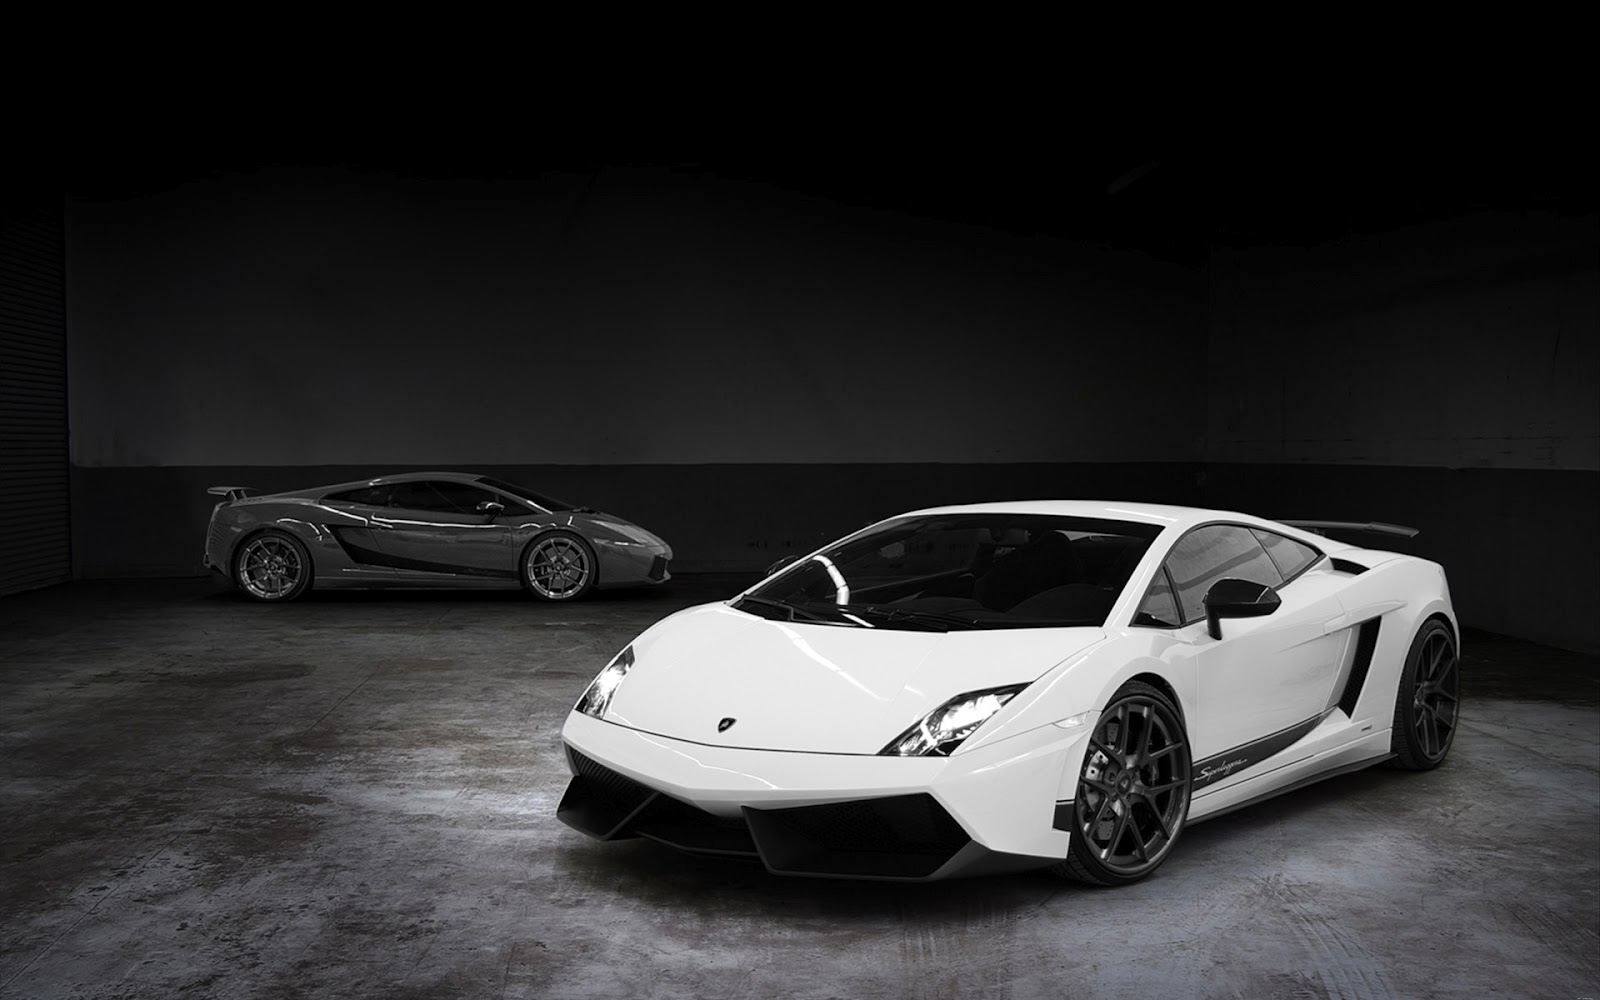 Lamborghini Gallardo In Garaga Black And White Photo HD Wallpaper